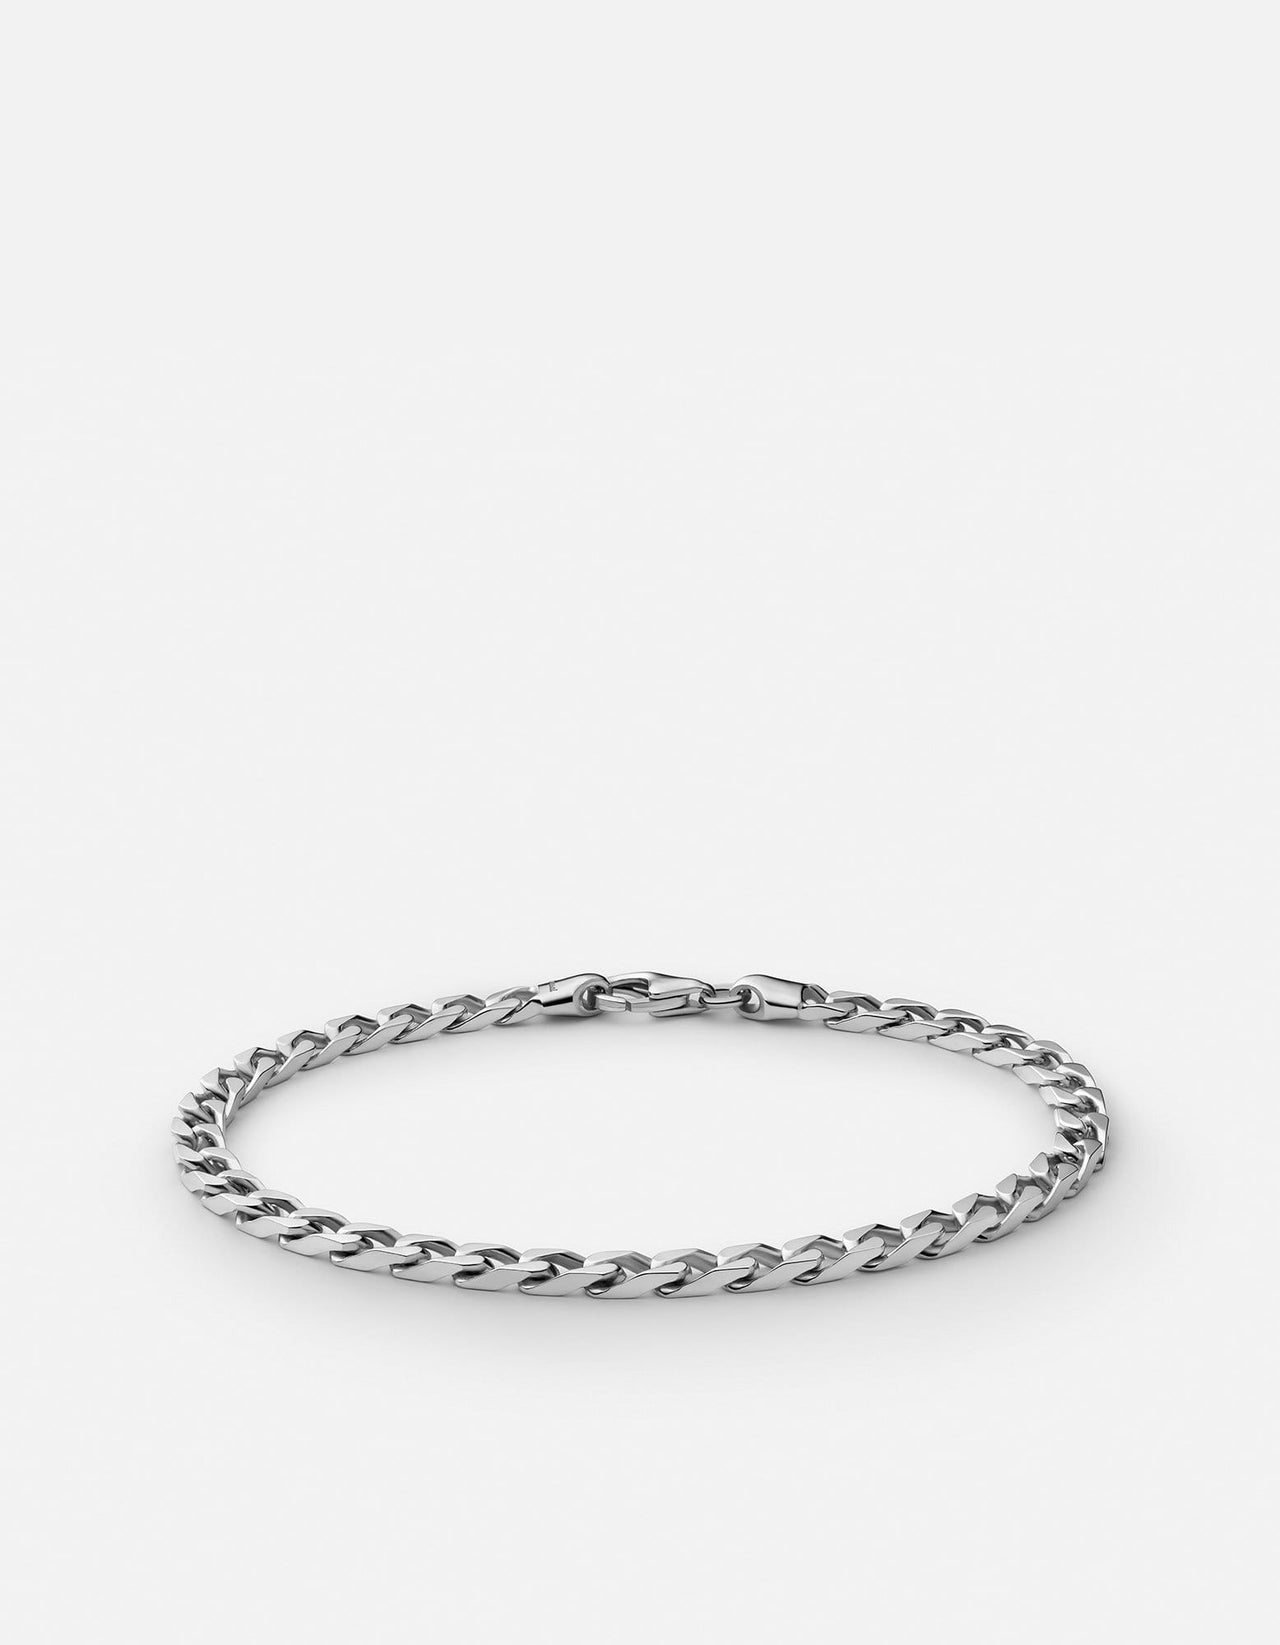 Ruby Stone Silver Bracelet at Rs 1500/piece | Ruby Bracelets in New Delhi |  ID: 26171439412